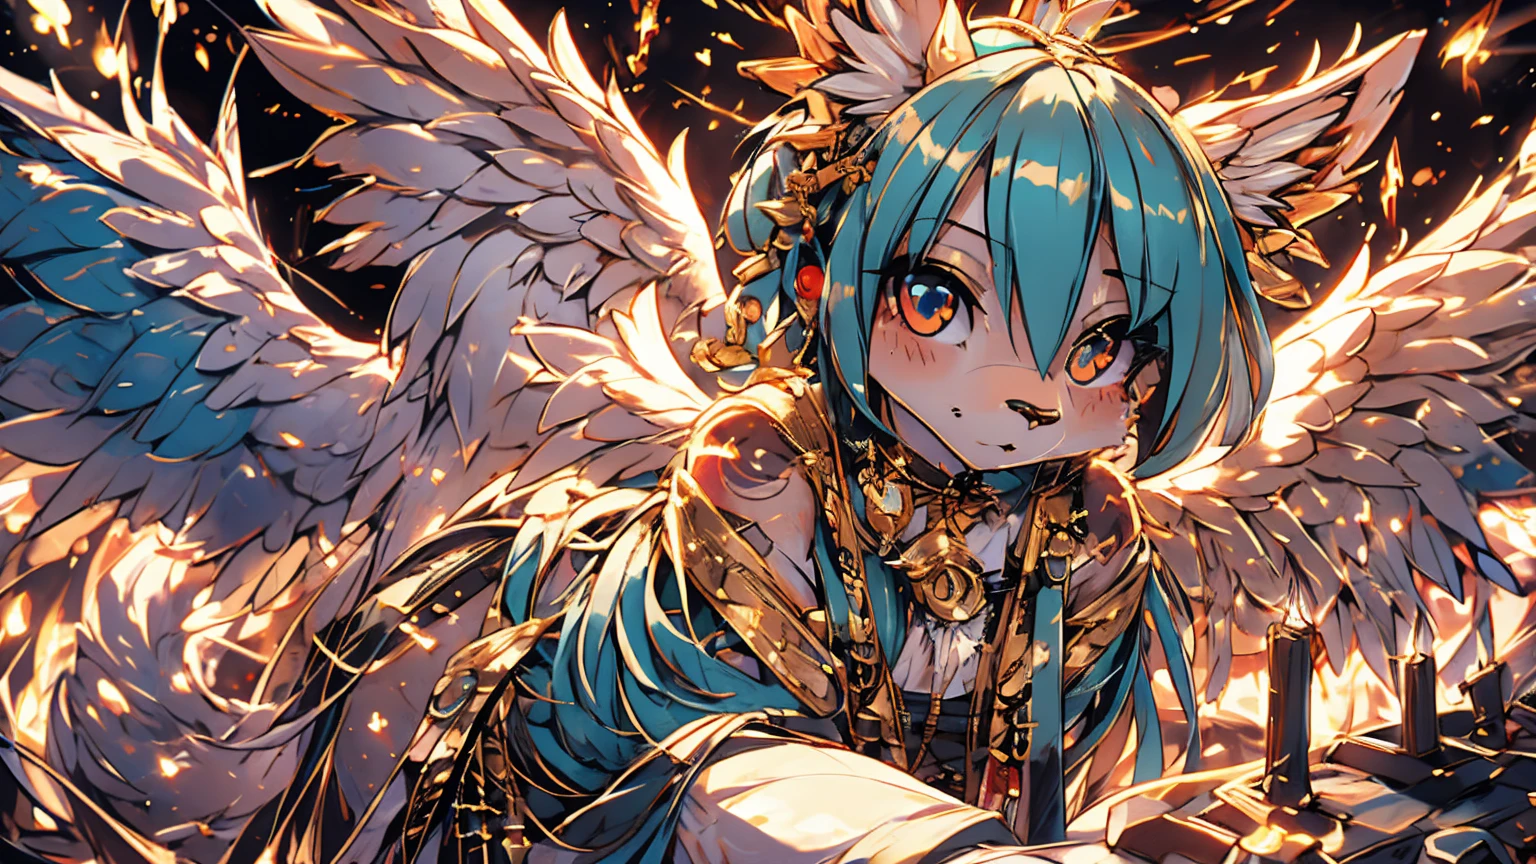 Miku Hatsune, add high definition_detail:1, blue fur,kitsune ears, tribal tattoo add_detail:1, in heaven add_detail, angelical girl, angel wigns add_detail, angelic yokai kitsune,